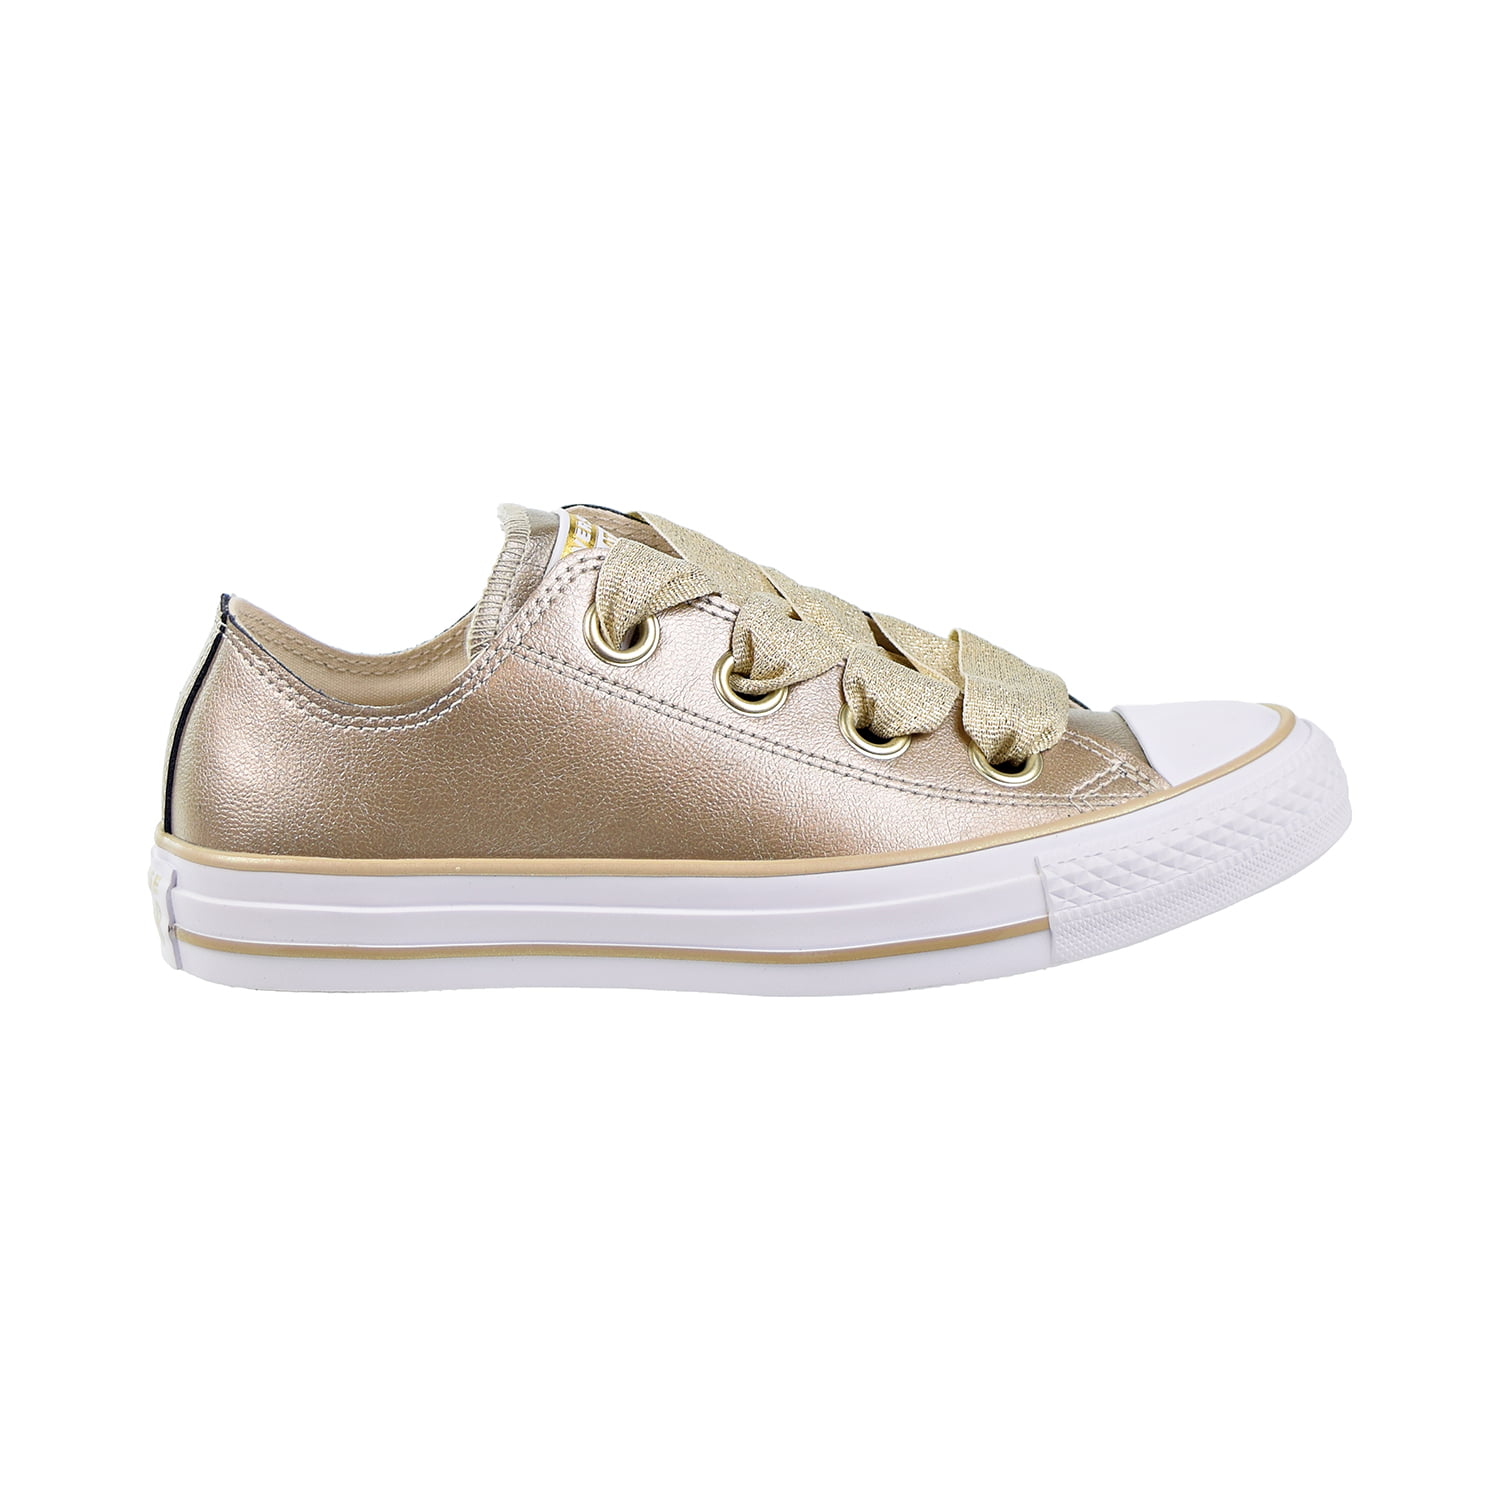 Converse Chuck Taylor All Star Big Eyelets OX Women's Shoes Metallic  Gold-White 561696c